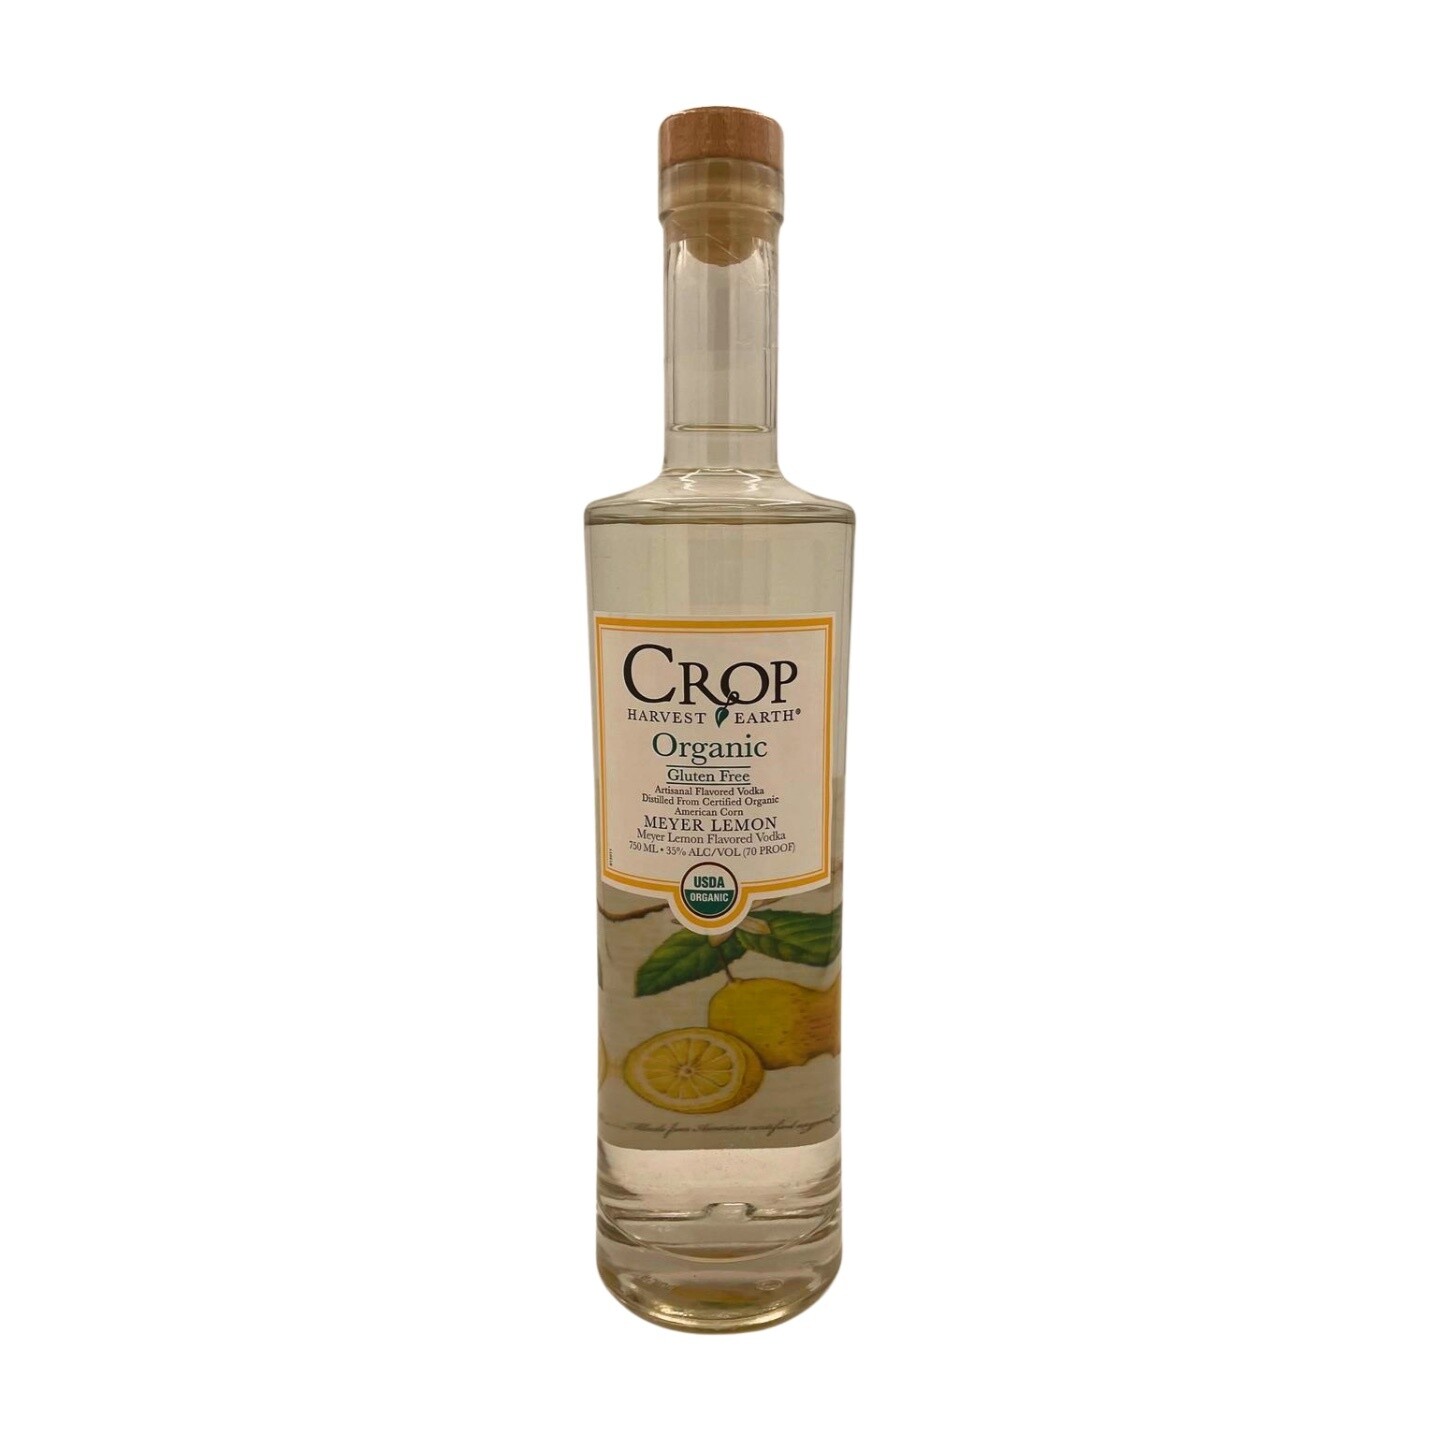 CROP Harvest Earth Organic Vodka Meyer Lemon